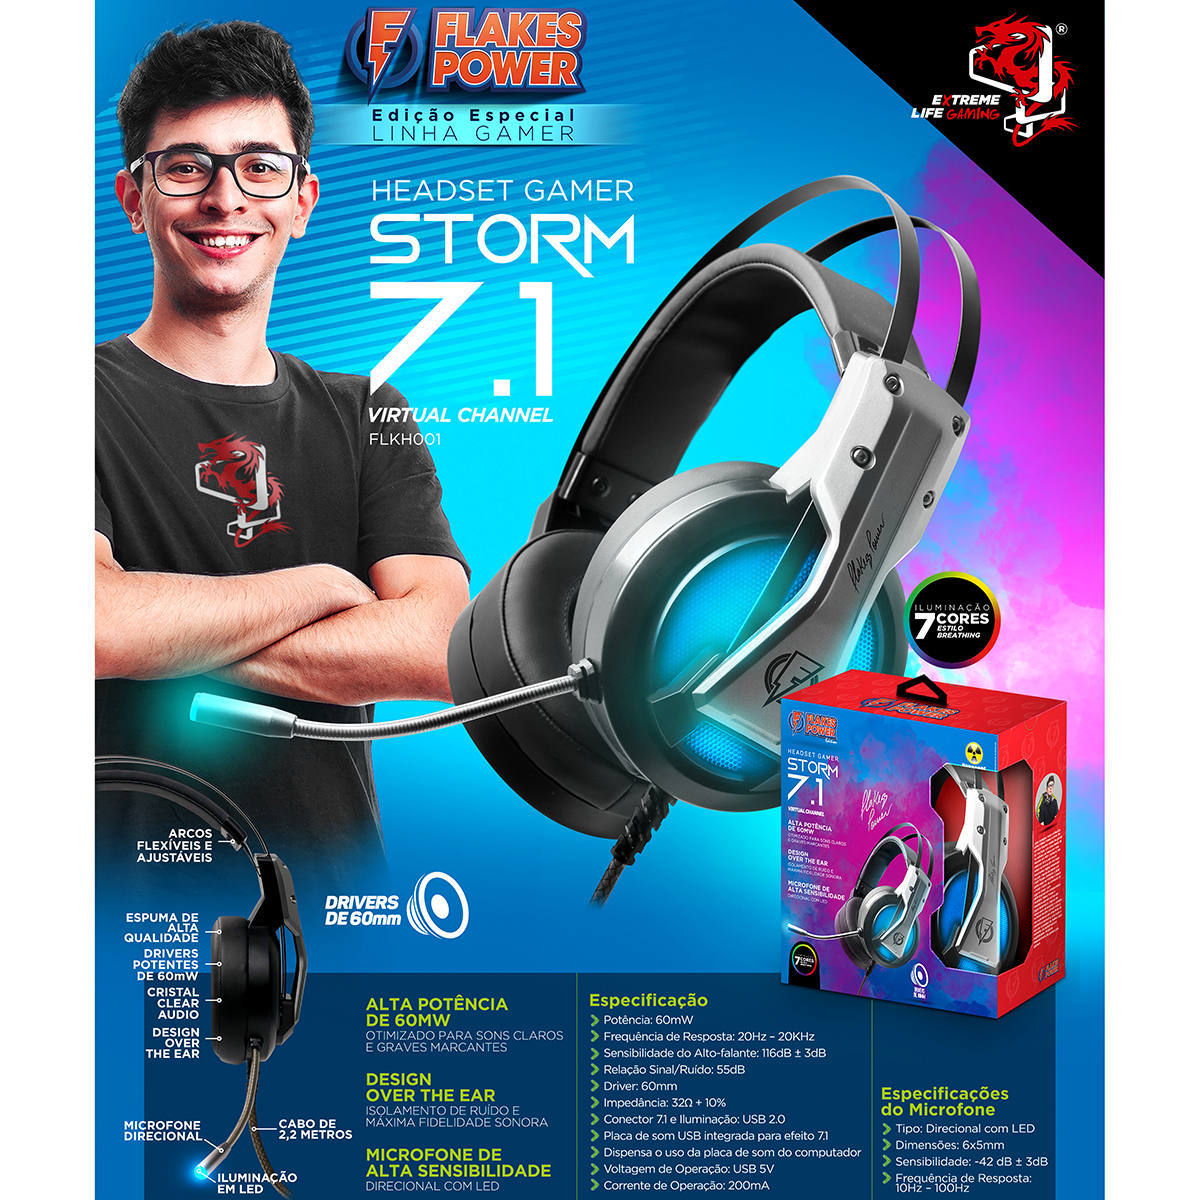 Headset Gamer Flakes Power Storm 7.1 Virtual Channel Com Microfone ELG FLKH001